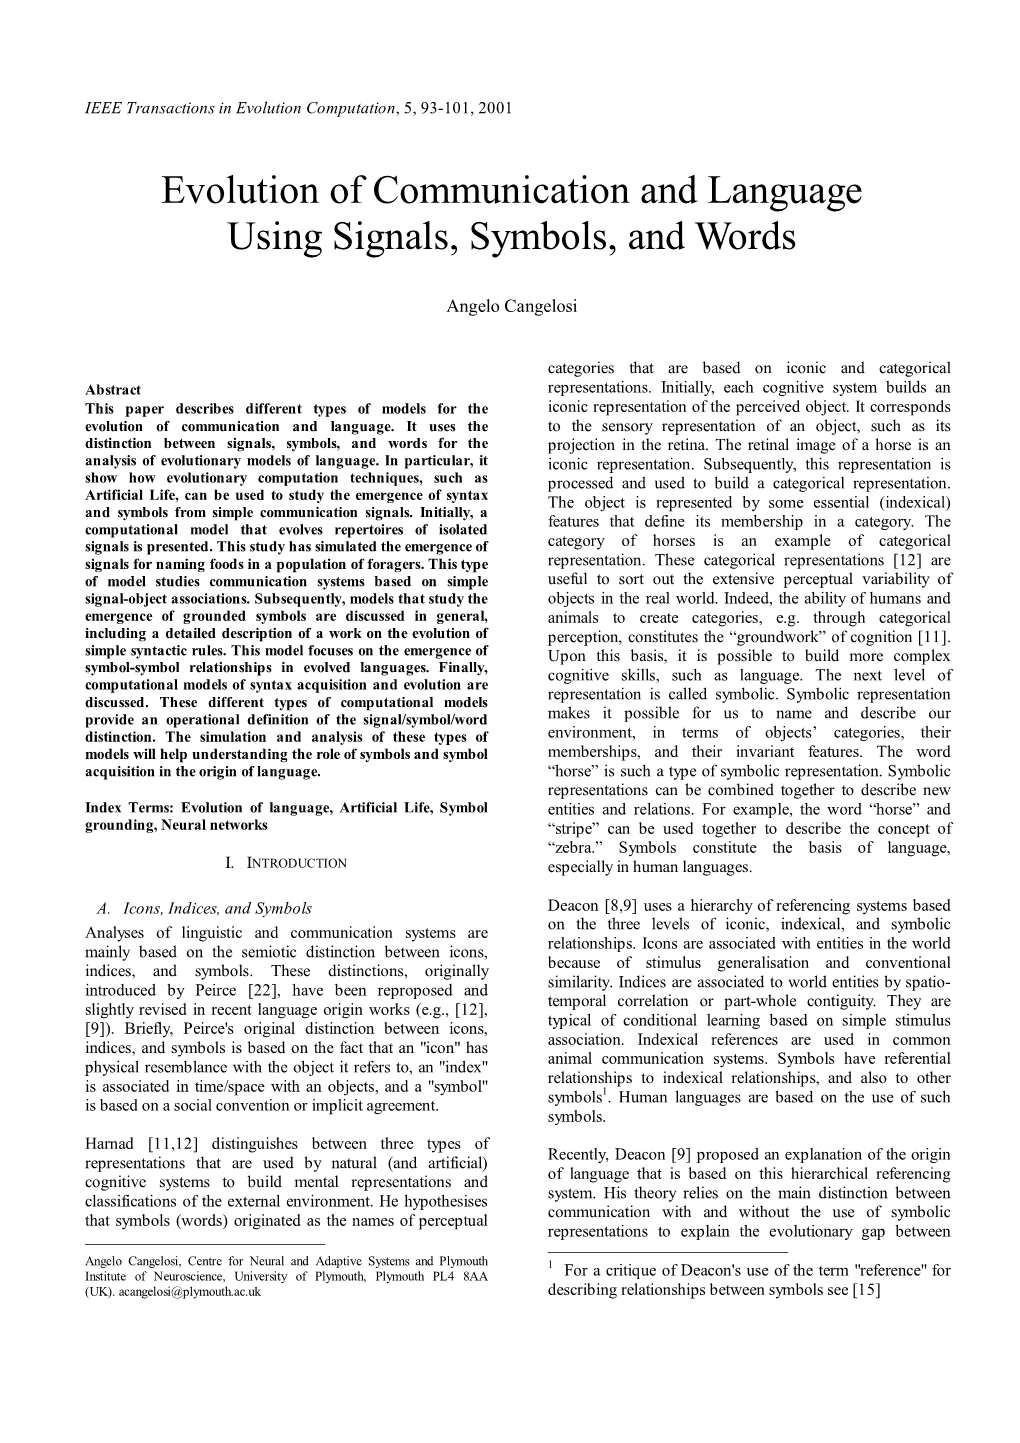 Evolution of Communication and Language Using Signals, Symbols